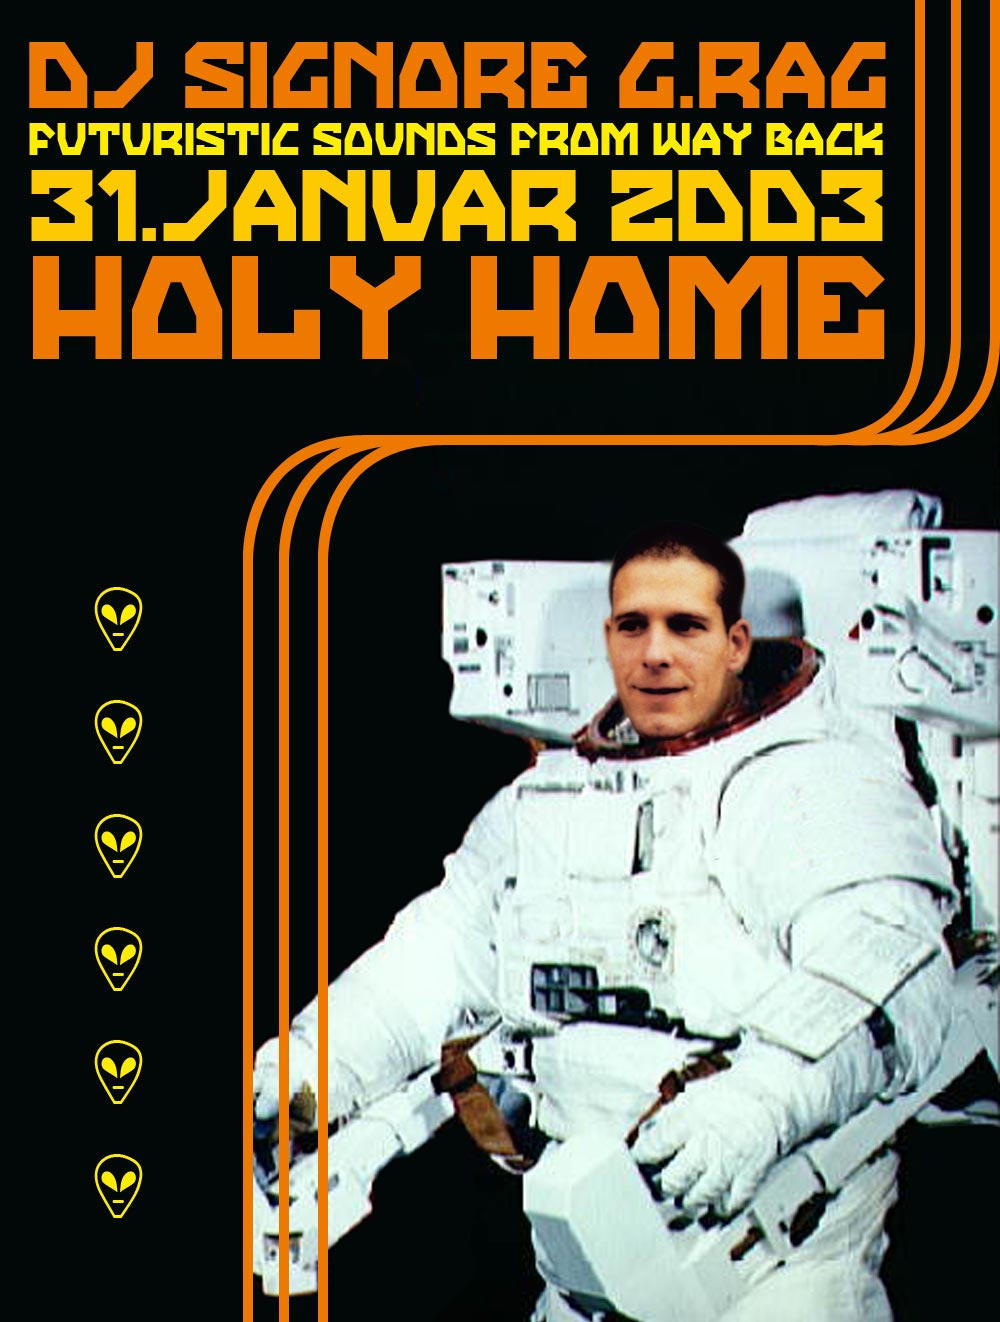 DJ Signore G.Rag, Holy Home, 2003 1